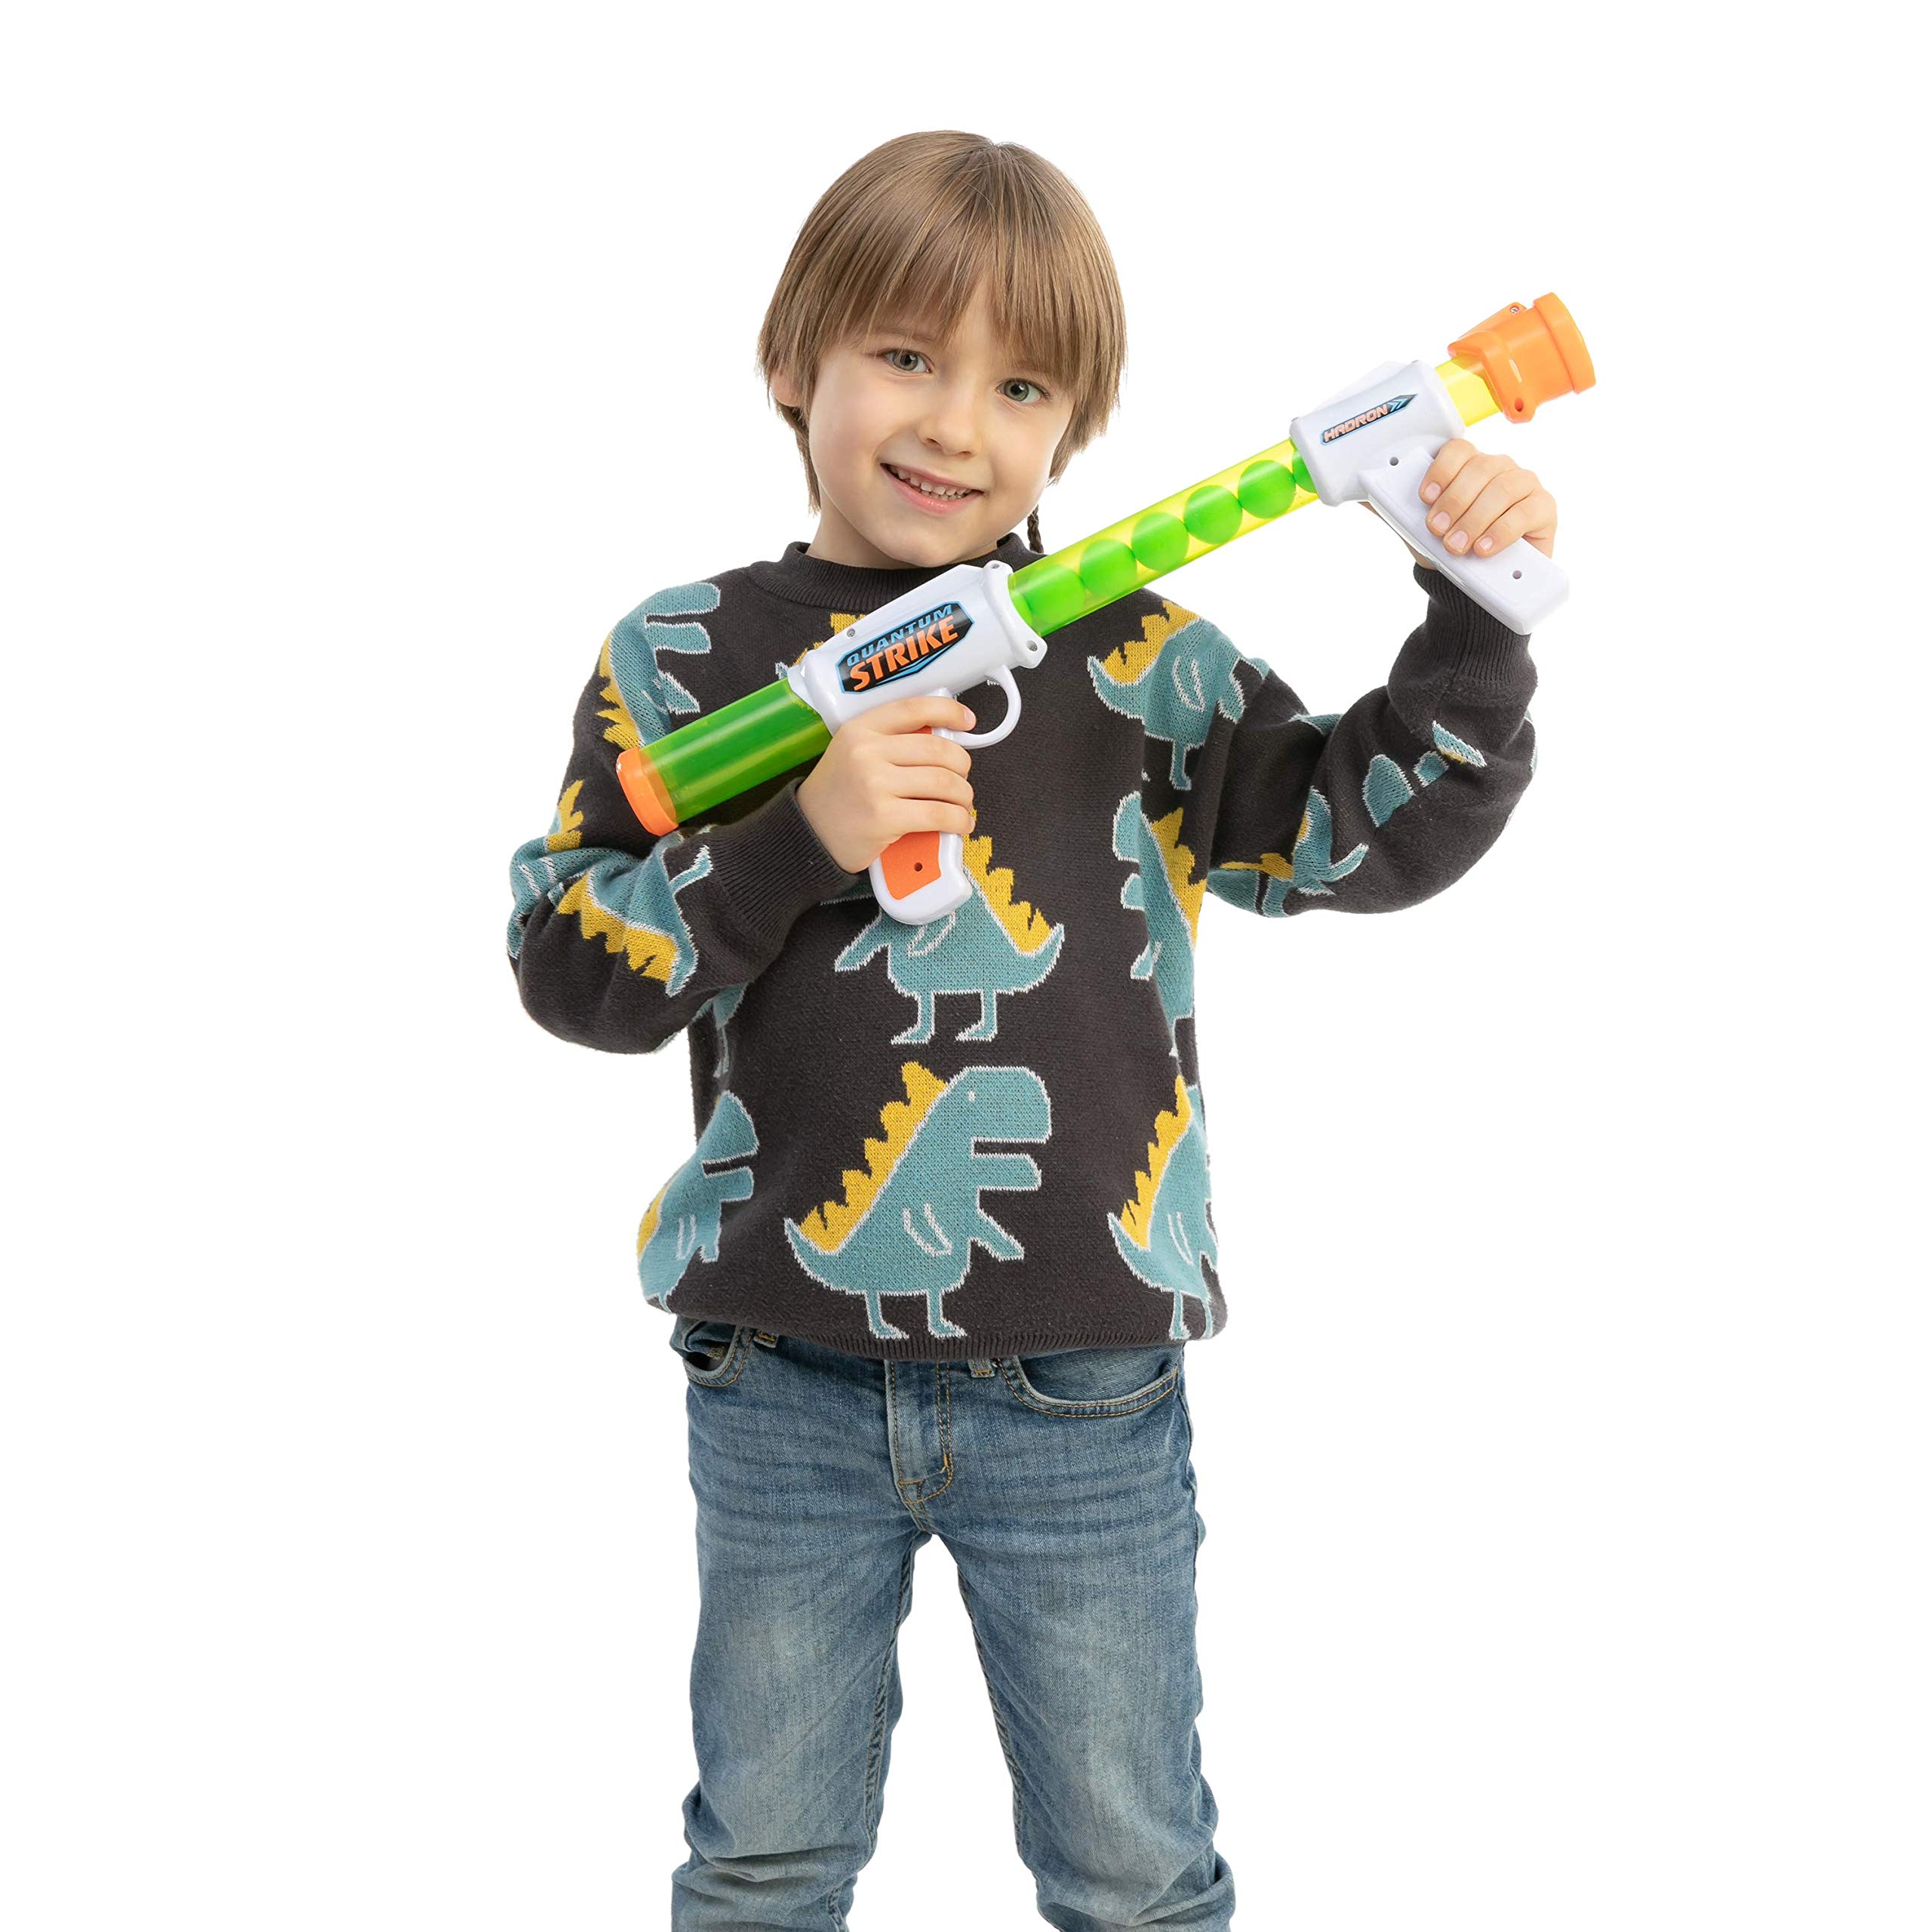 JOYIN Foam Ball Popper Gun Toy Set with Standing Shooting Target, Foam Ball Popper Air Toy Guns, 24 Foam Balls, Shooting Game for Kids Indoor Outdoor Play